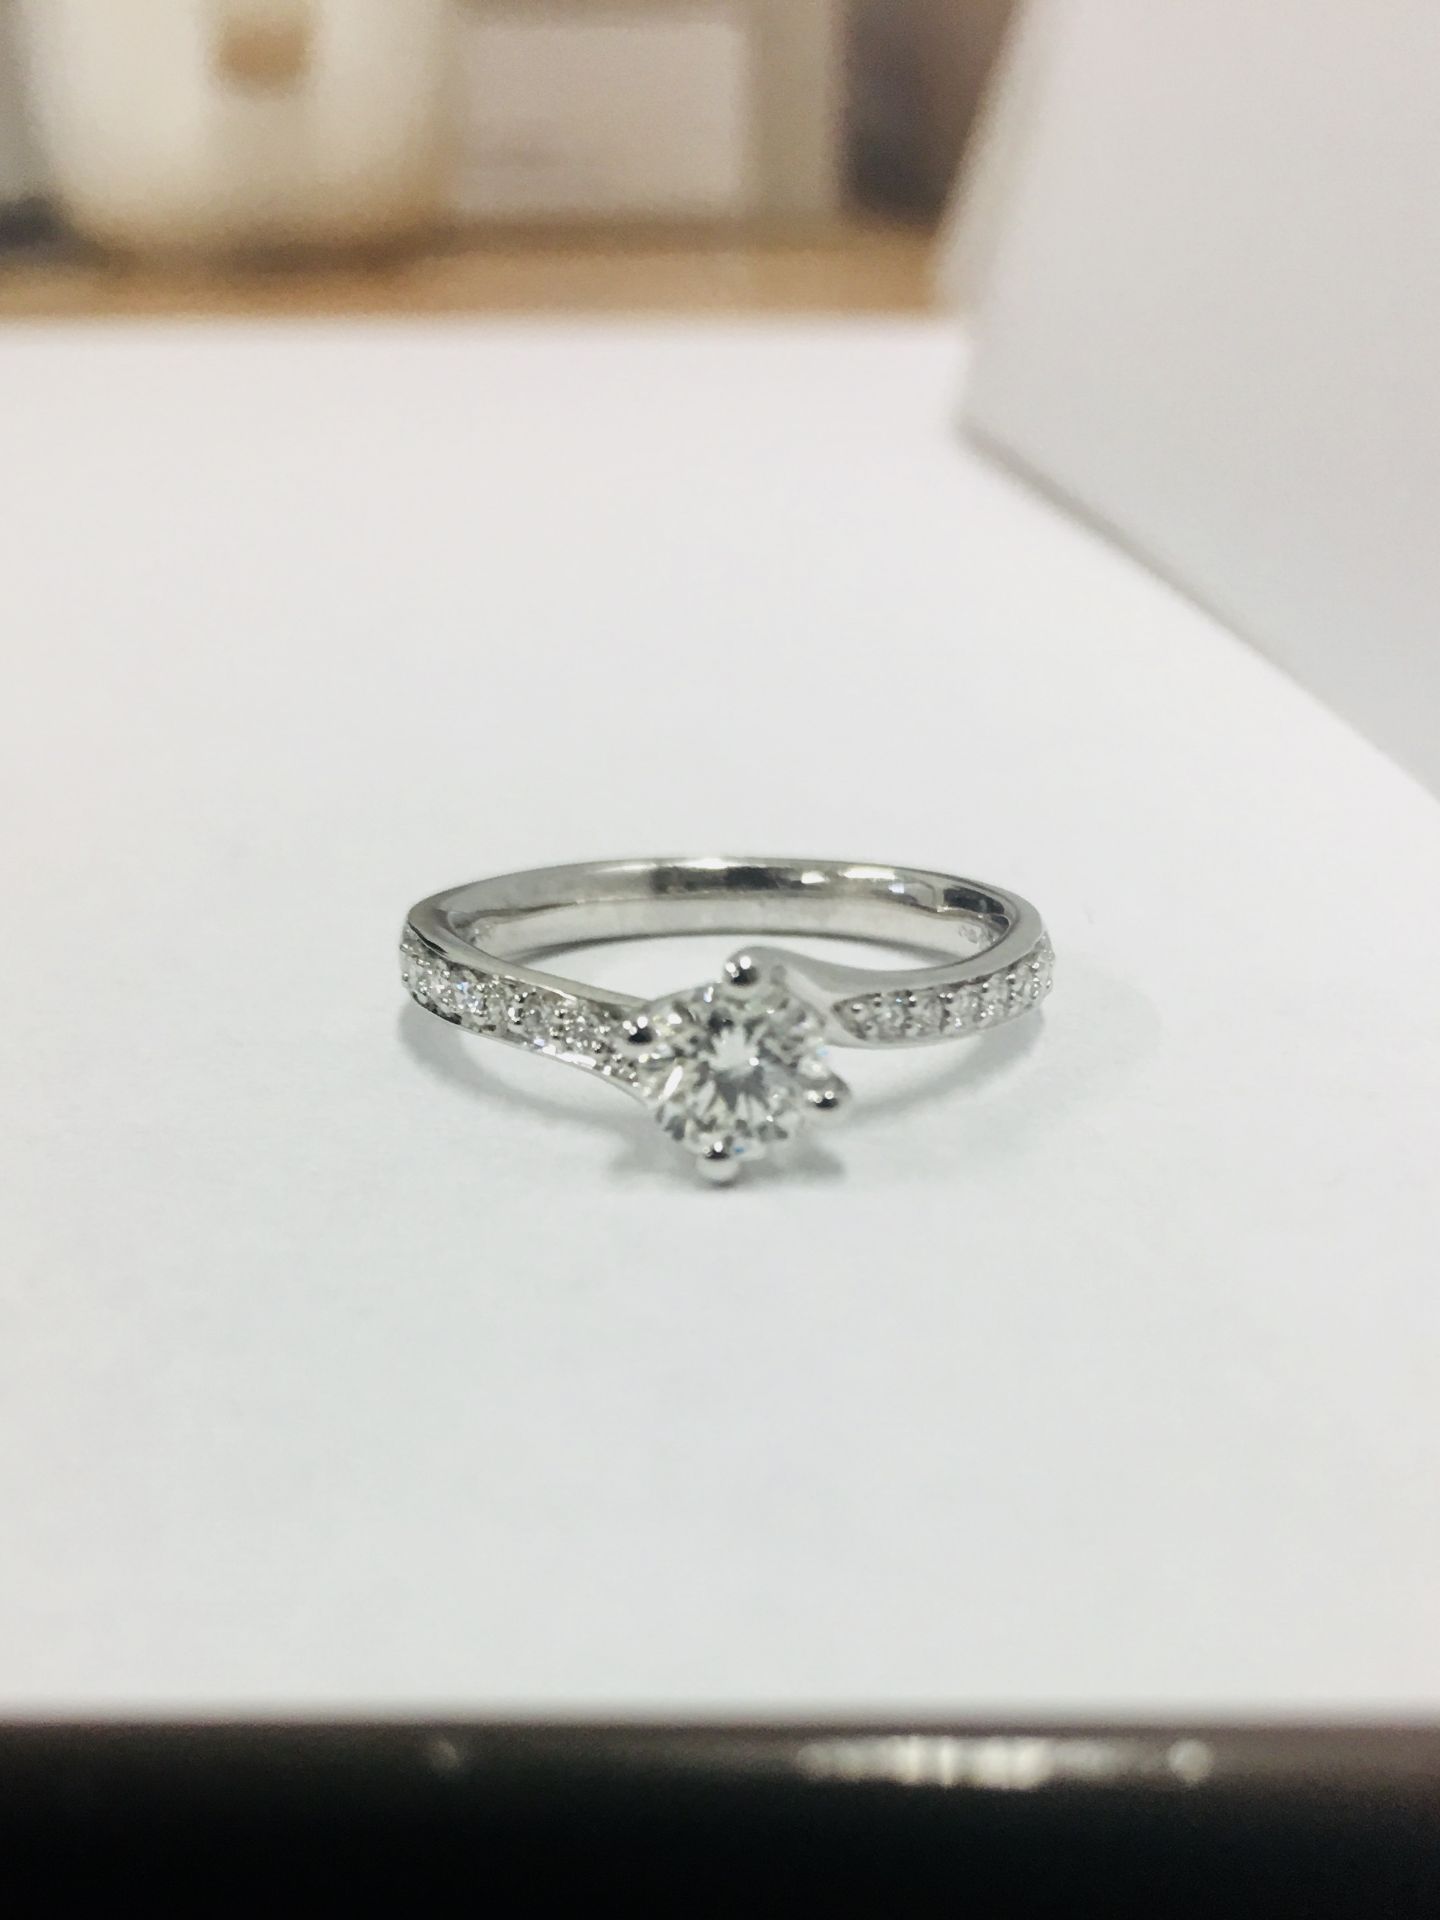 platinum damond solitaire ring,0.50ct brilliant cut diamond D colour vs clarity,3.83gms platinum